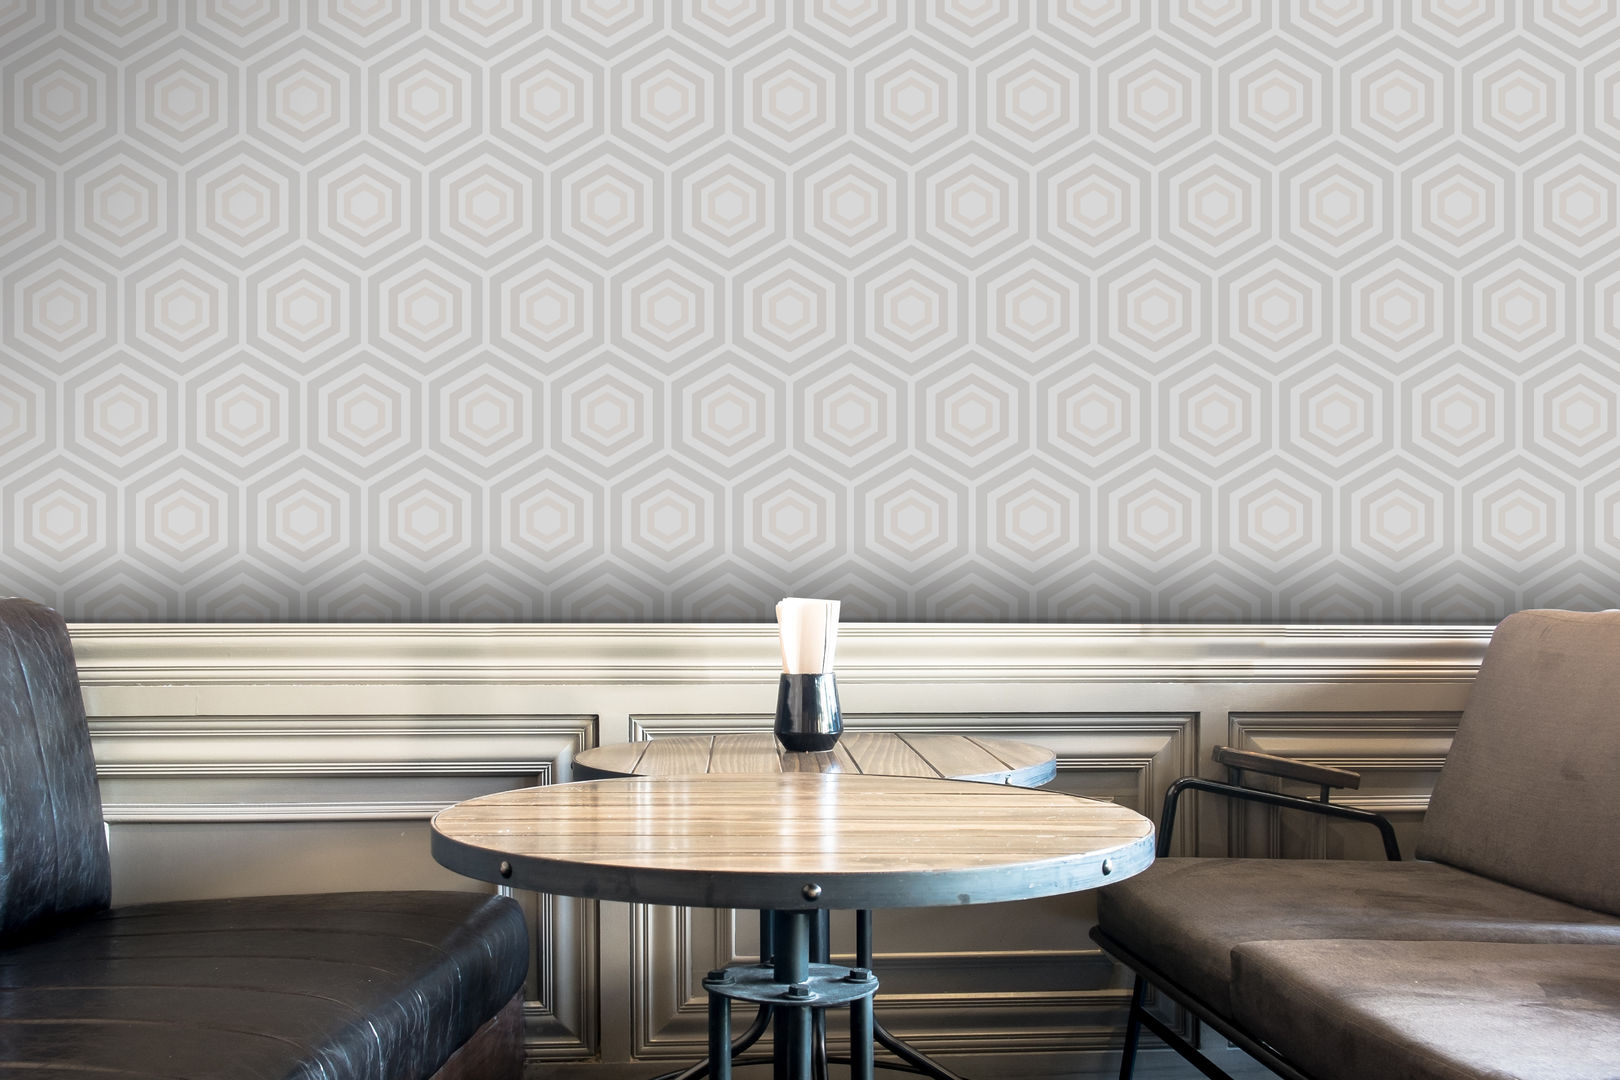 Hexágono Bege e Cinzento OH Wallpaper Modern walls & floors Paper Wallpaper